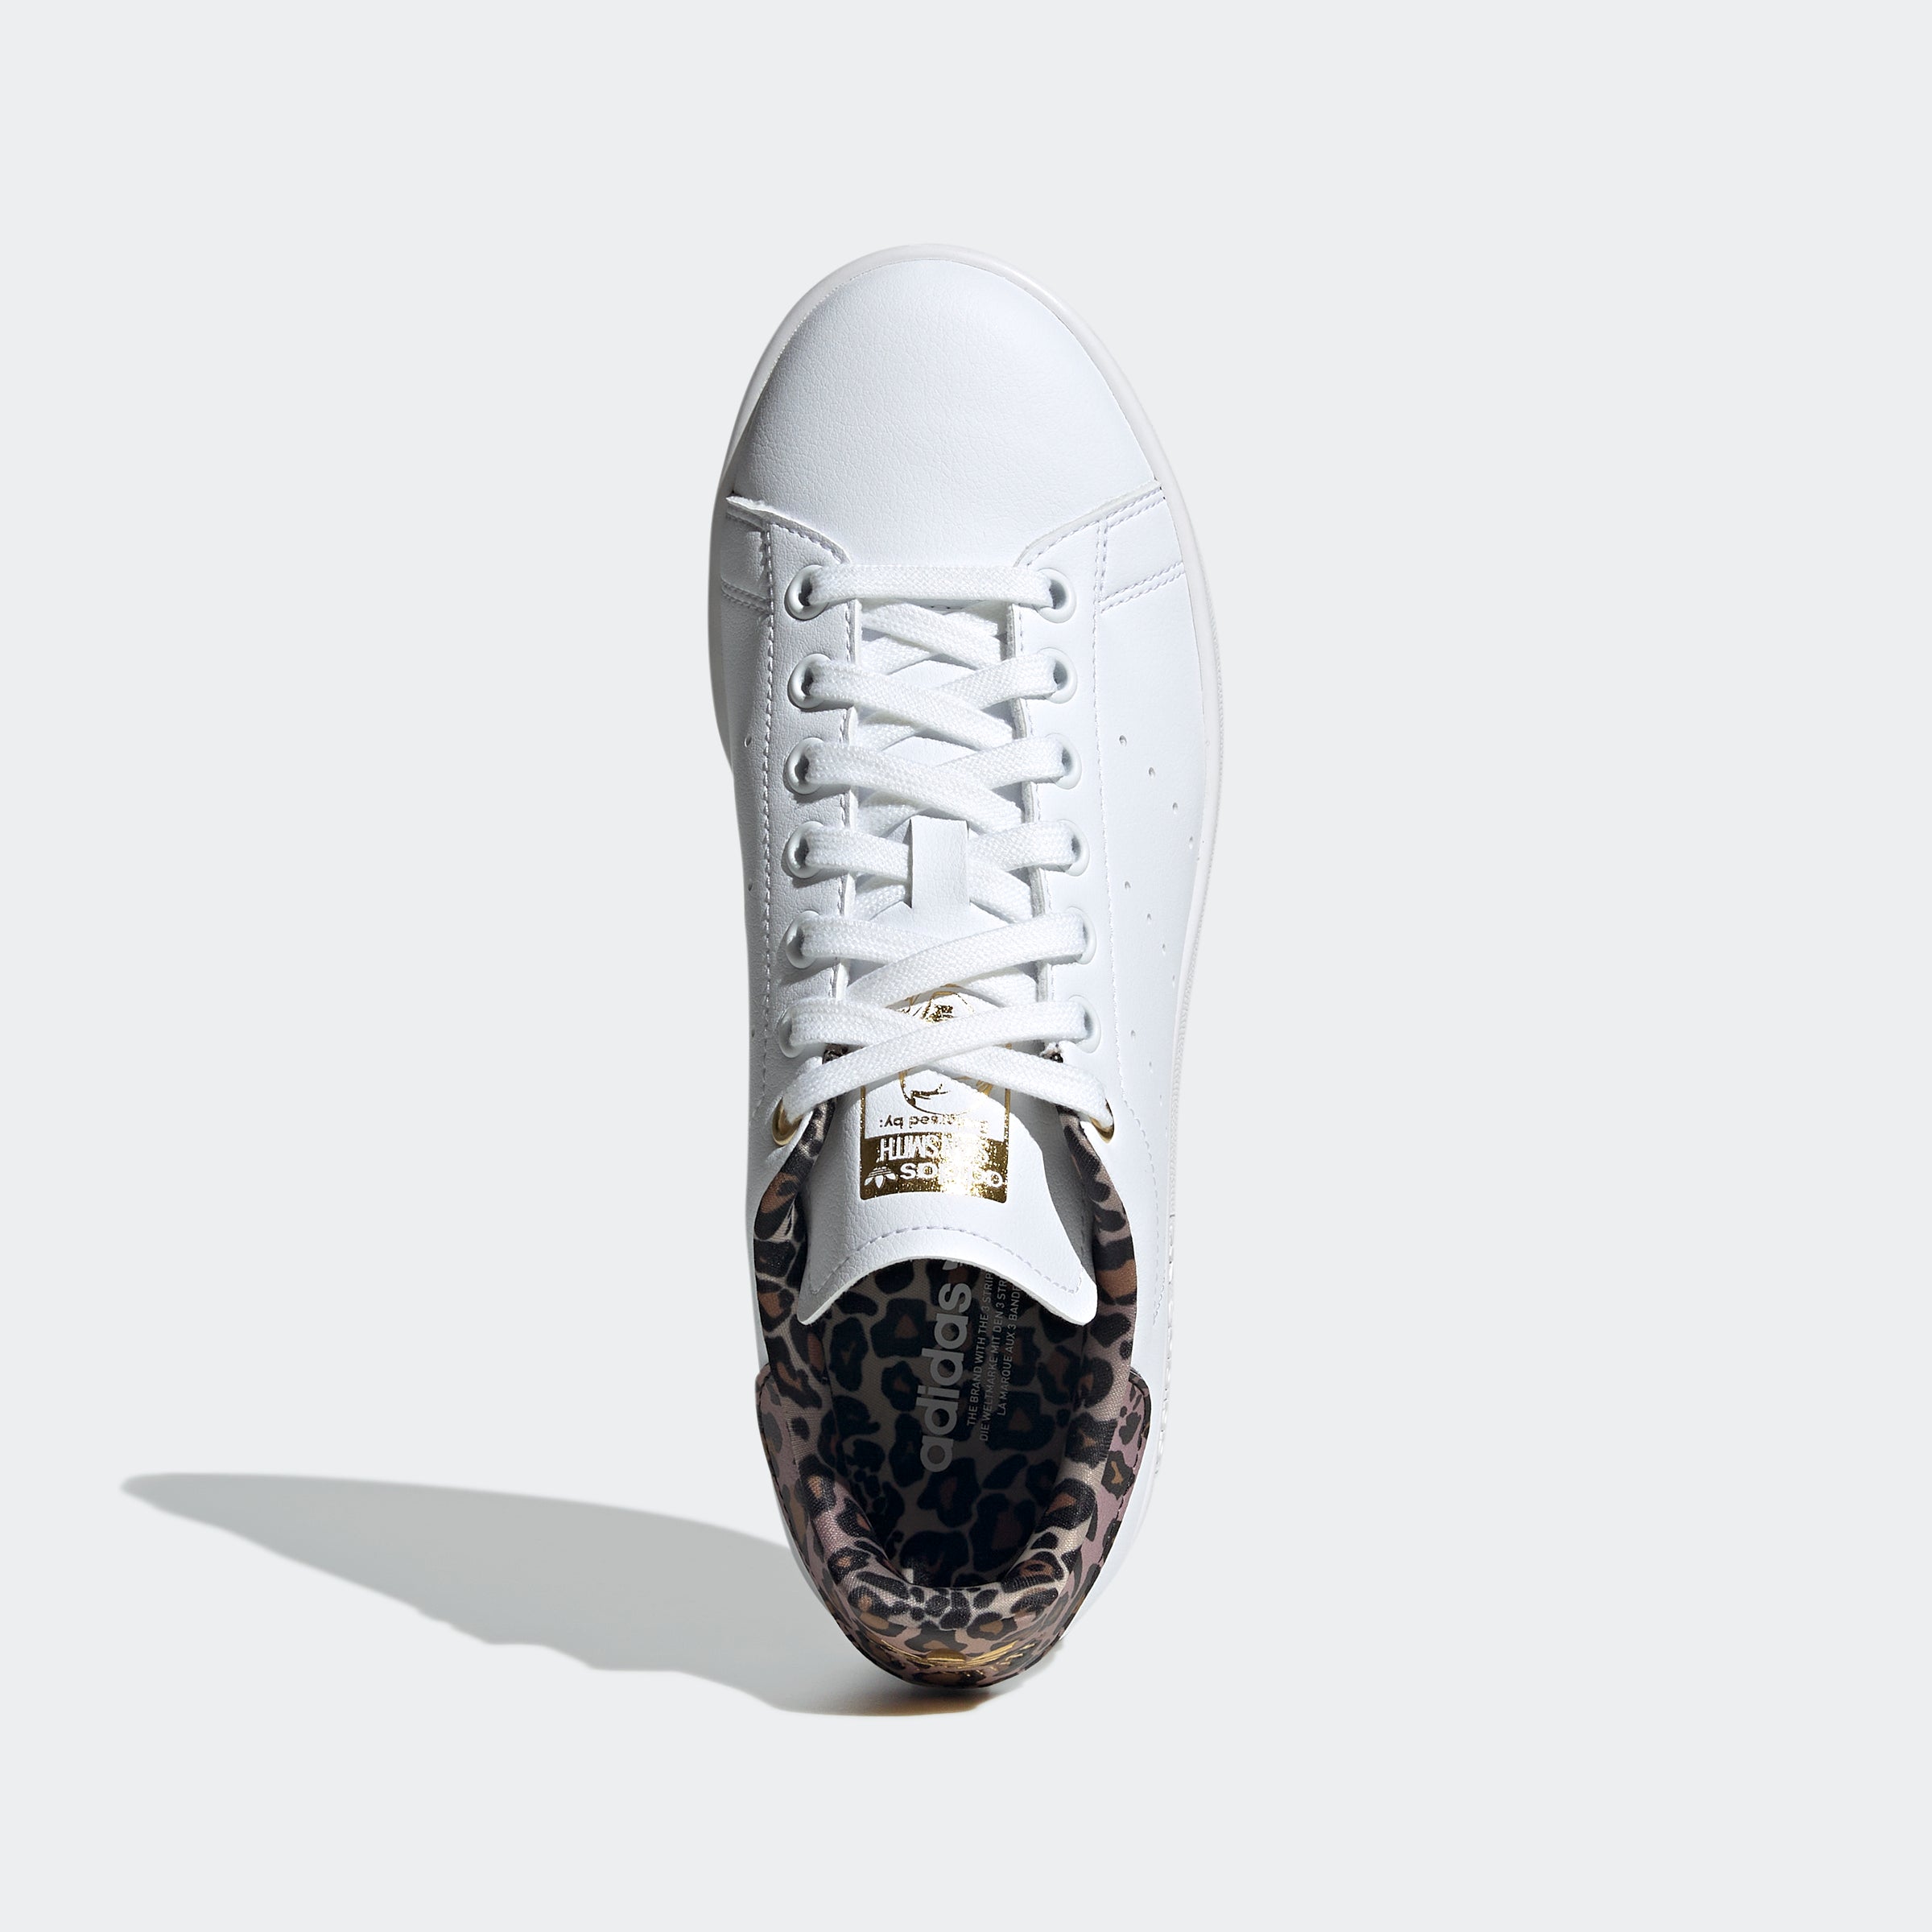 verontreiniging Score driehoek Women's adidas Stan Smith Shoes Leopard Print | Chicago City Sports